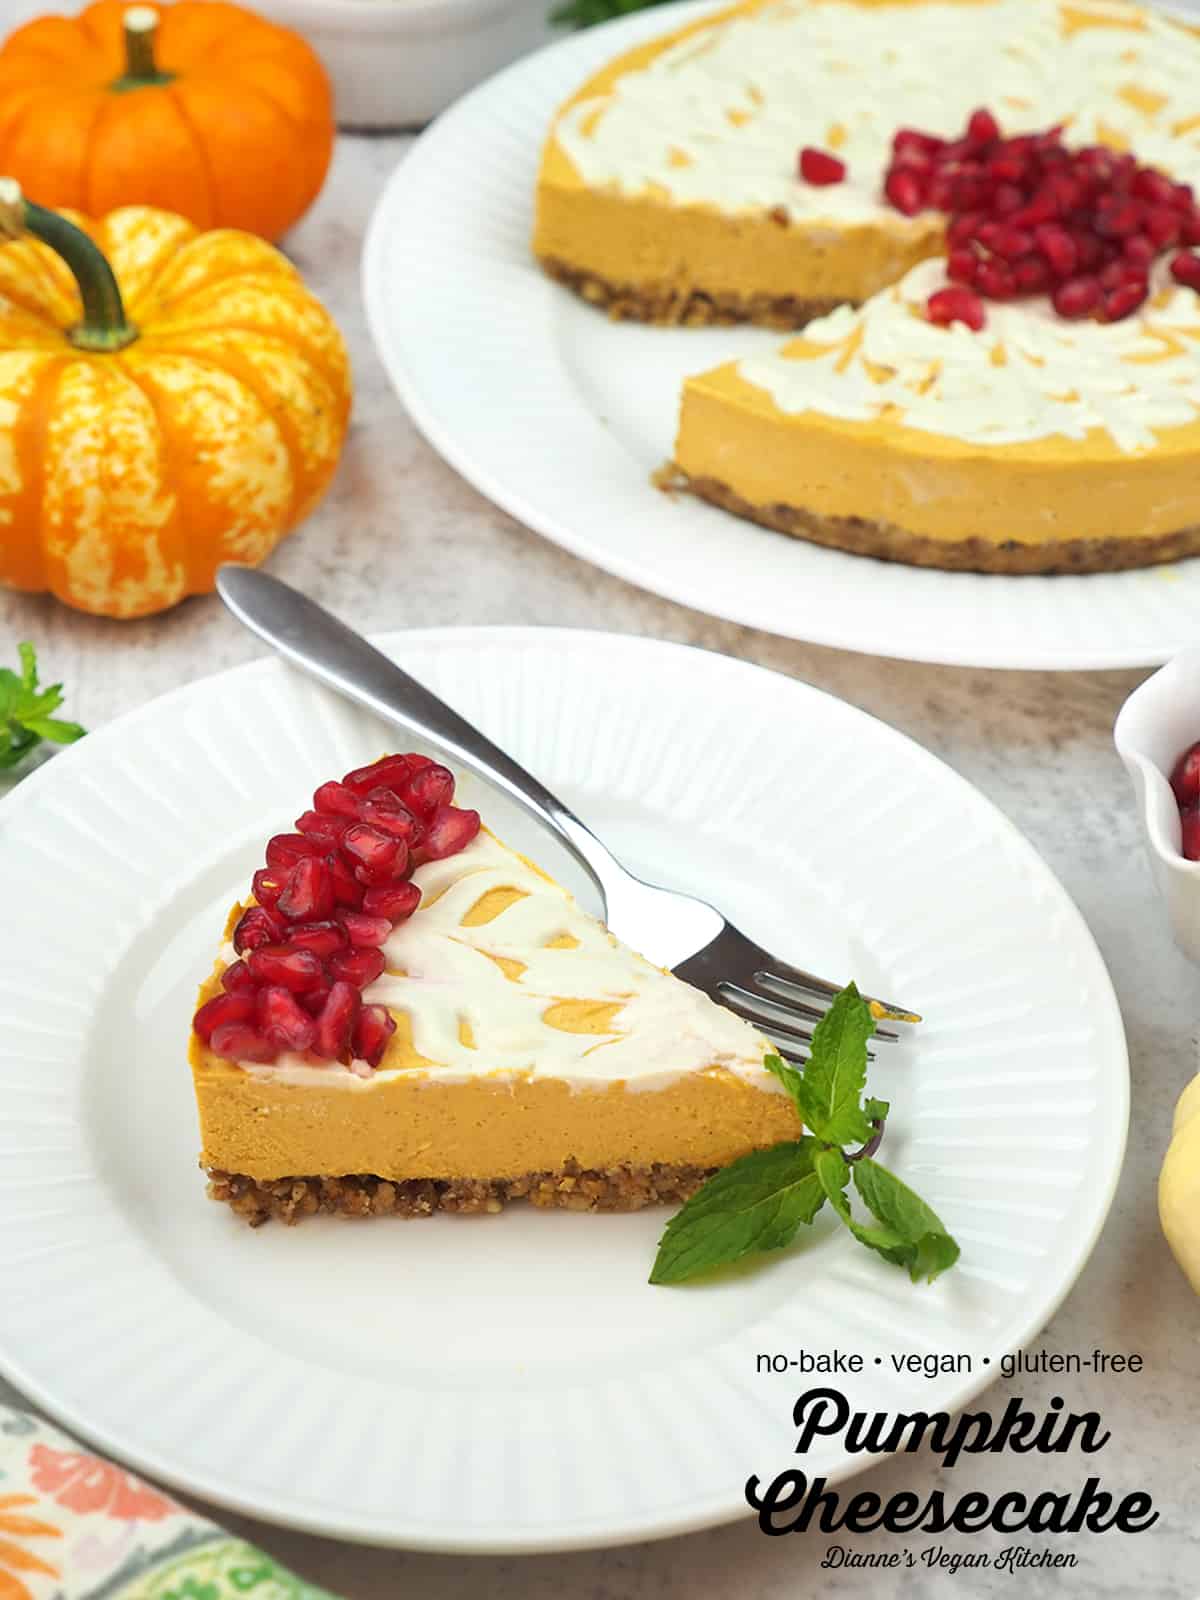 Vegan Pumpkin Cheesecake with text overlay